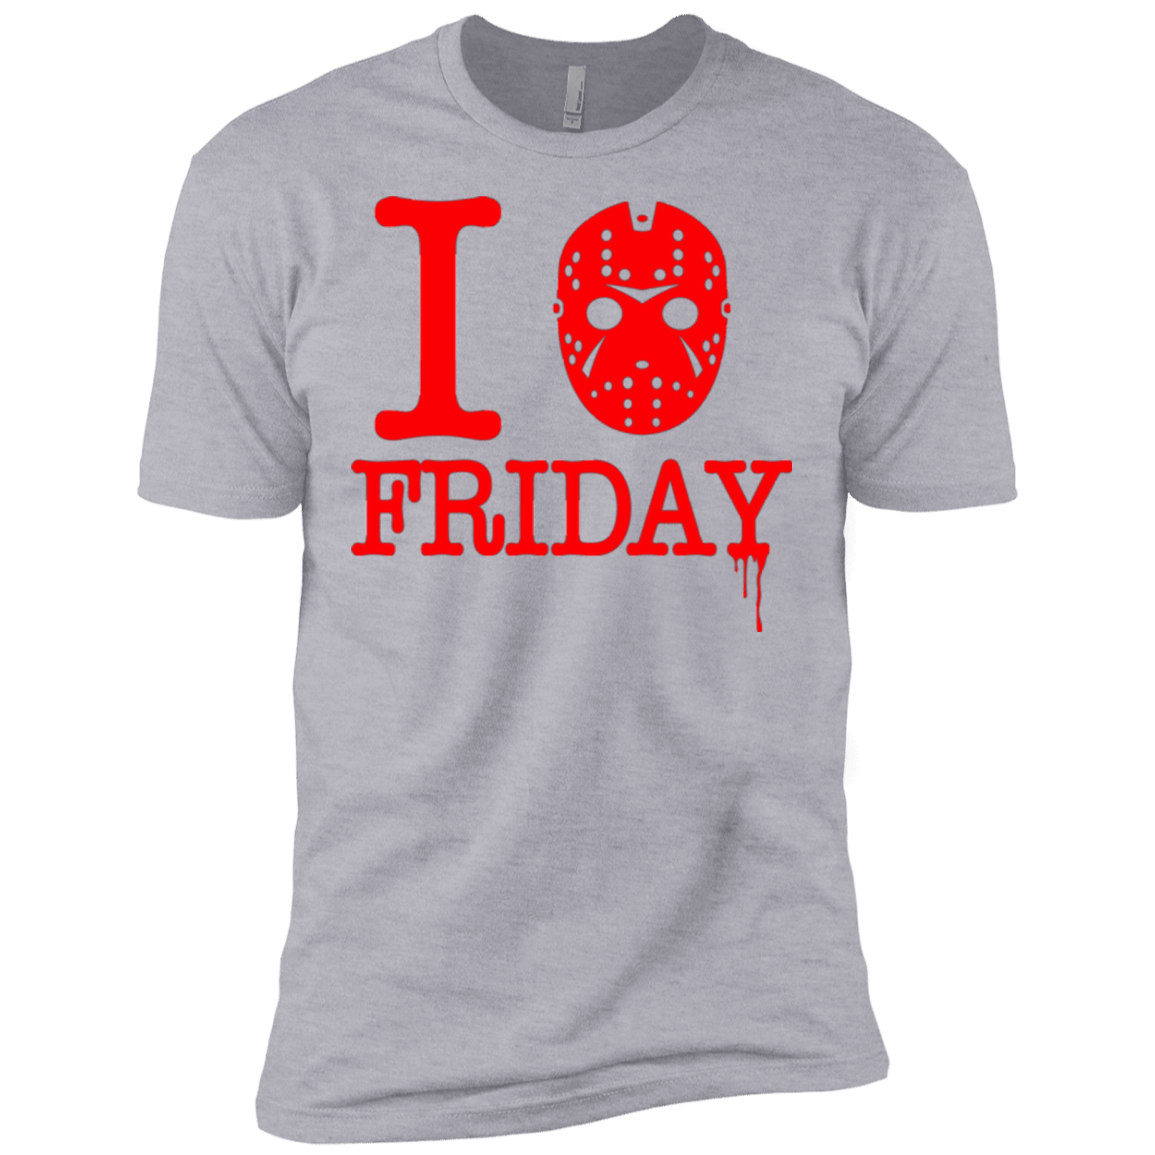 T-Shirts Heather Grey / X-Small I Love Friday Men's Premium T-Shirt